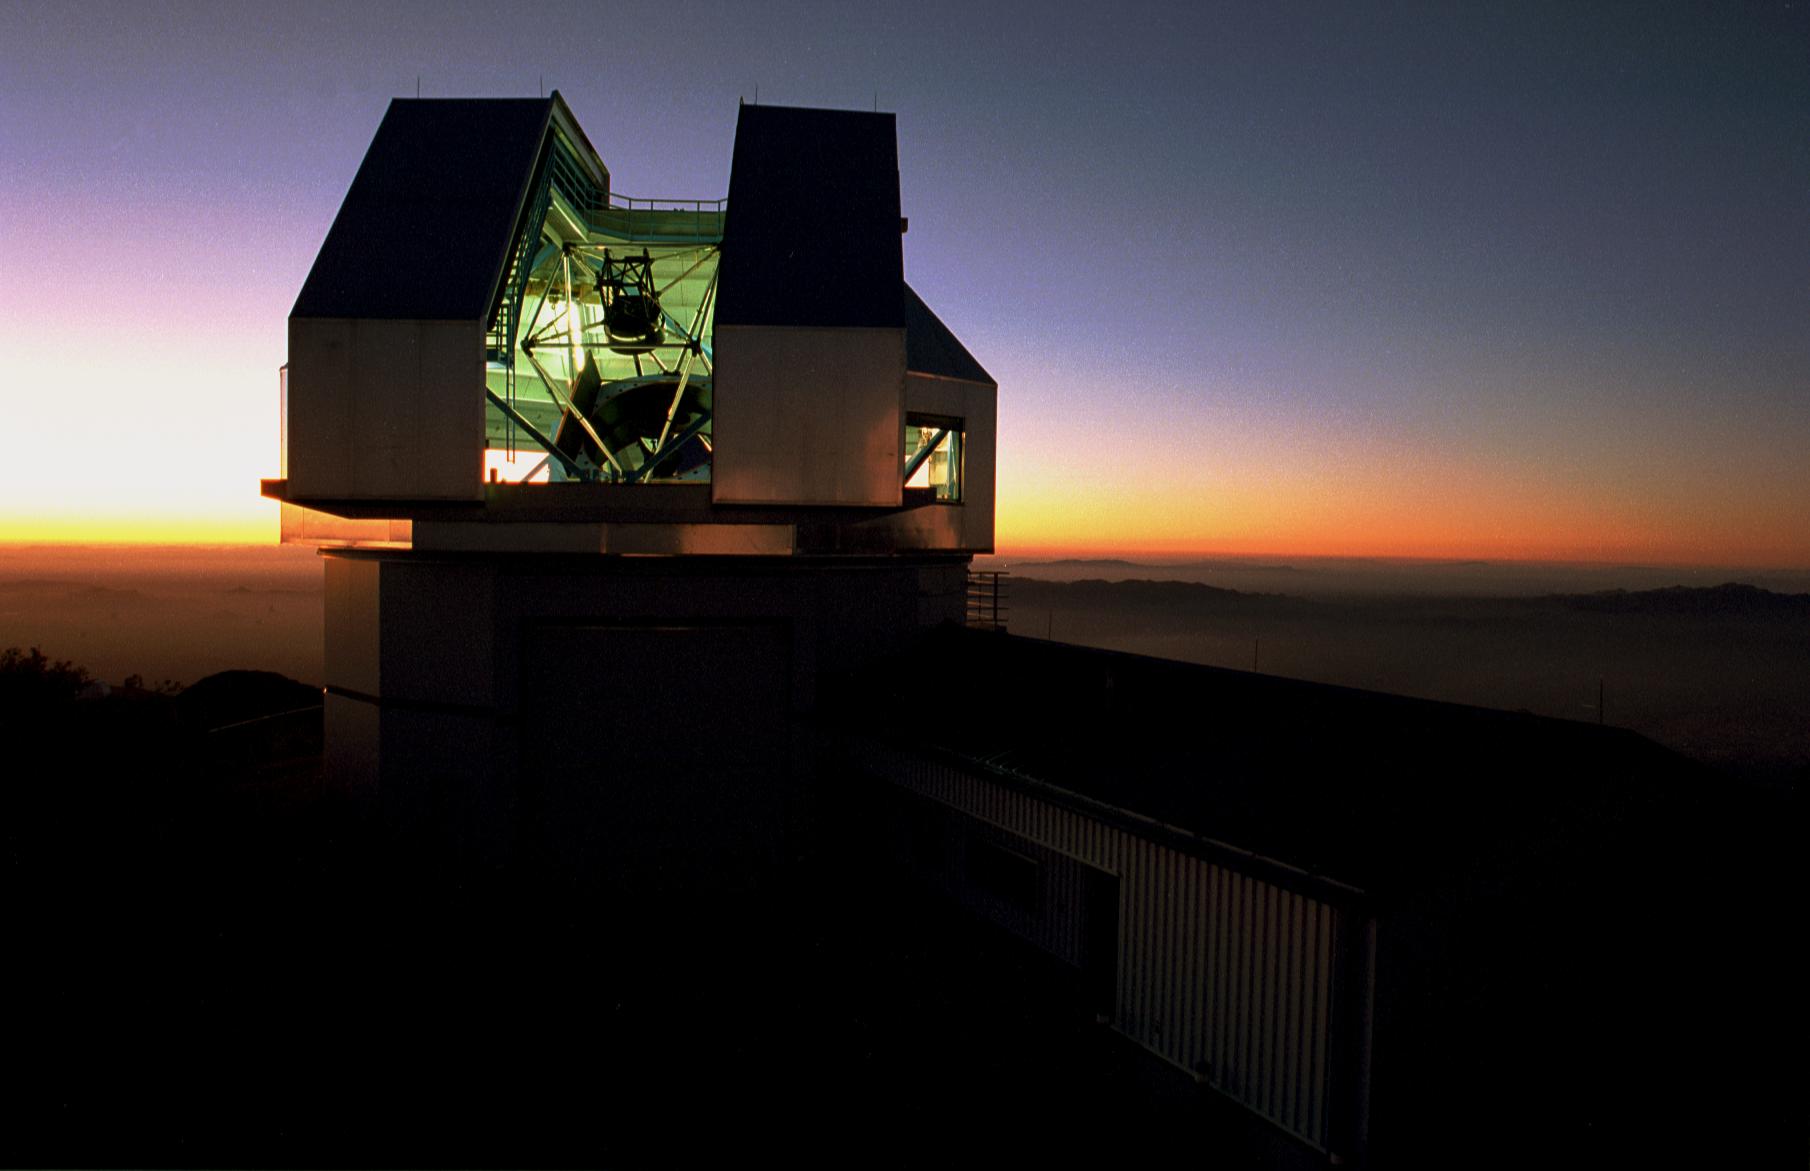 the 3.5-meter WIYN telescope at the Kitt Peak National Observatory